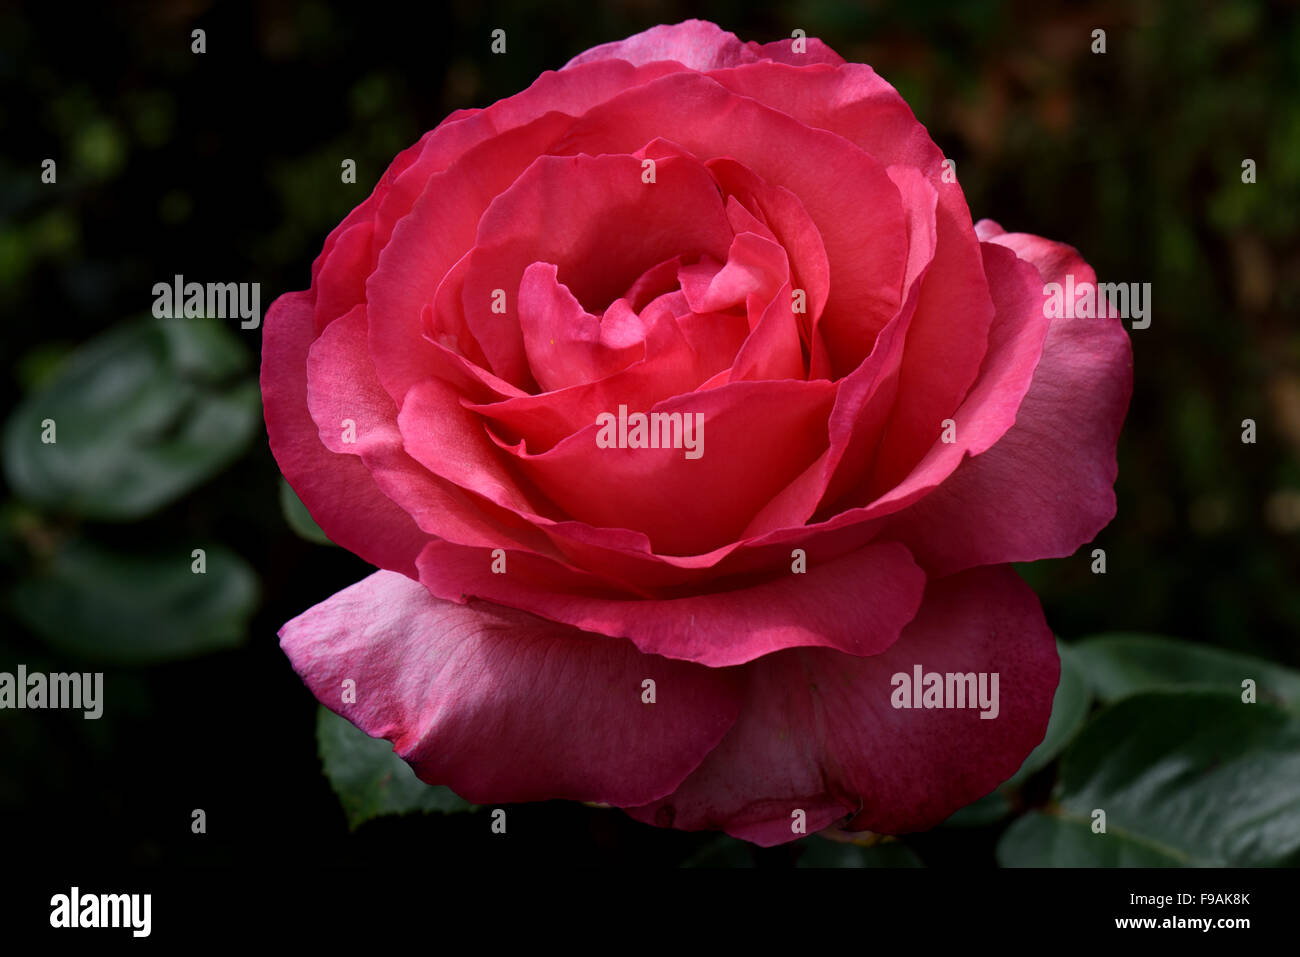 Una perfecta red rose bloom contra un fondo oscuro Foto de stock